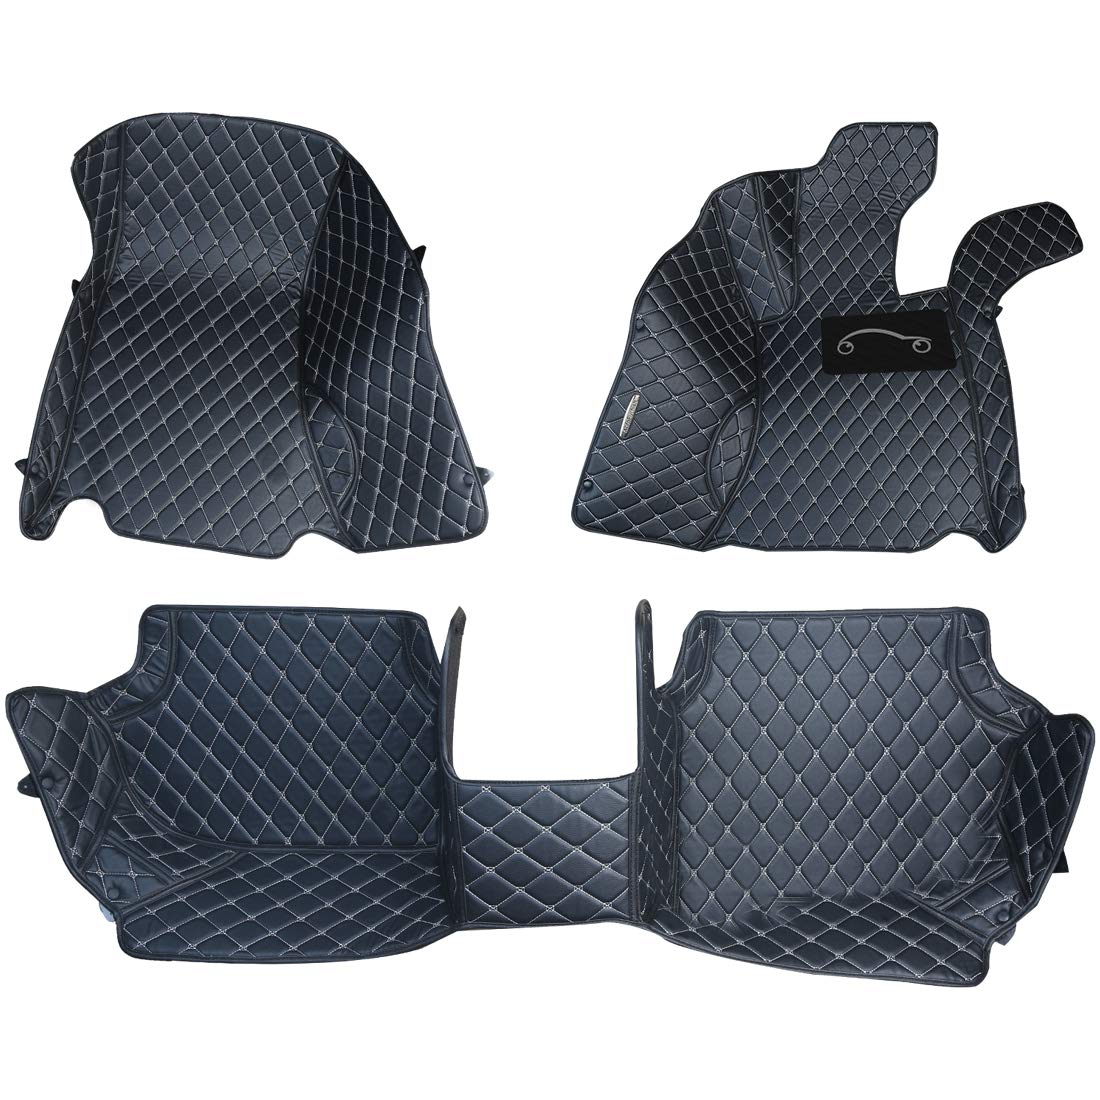 Tata Safari (7 Seater) 2021 5D Premium Car Floor Mat, All Weather Proof, Elegant & Stylish, 100% Waterproof & Odorless, Heavy Duty (12mm Faux Leather, 2 Rows)